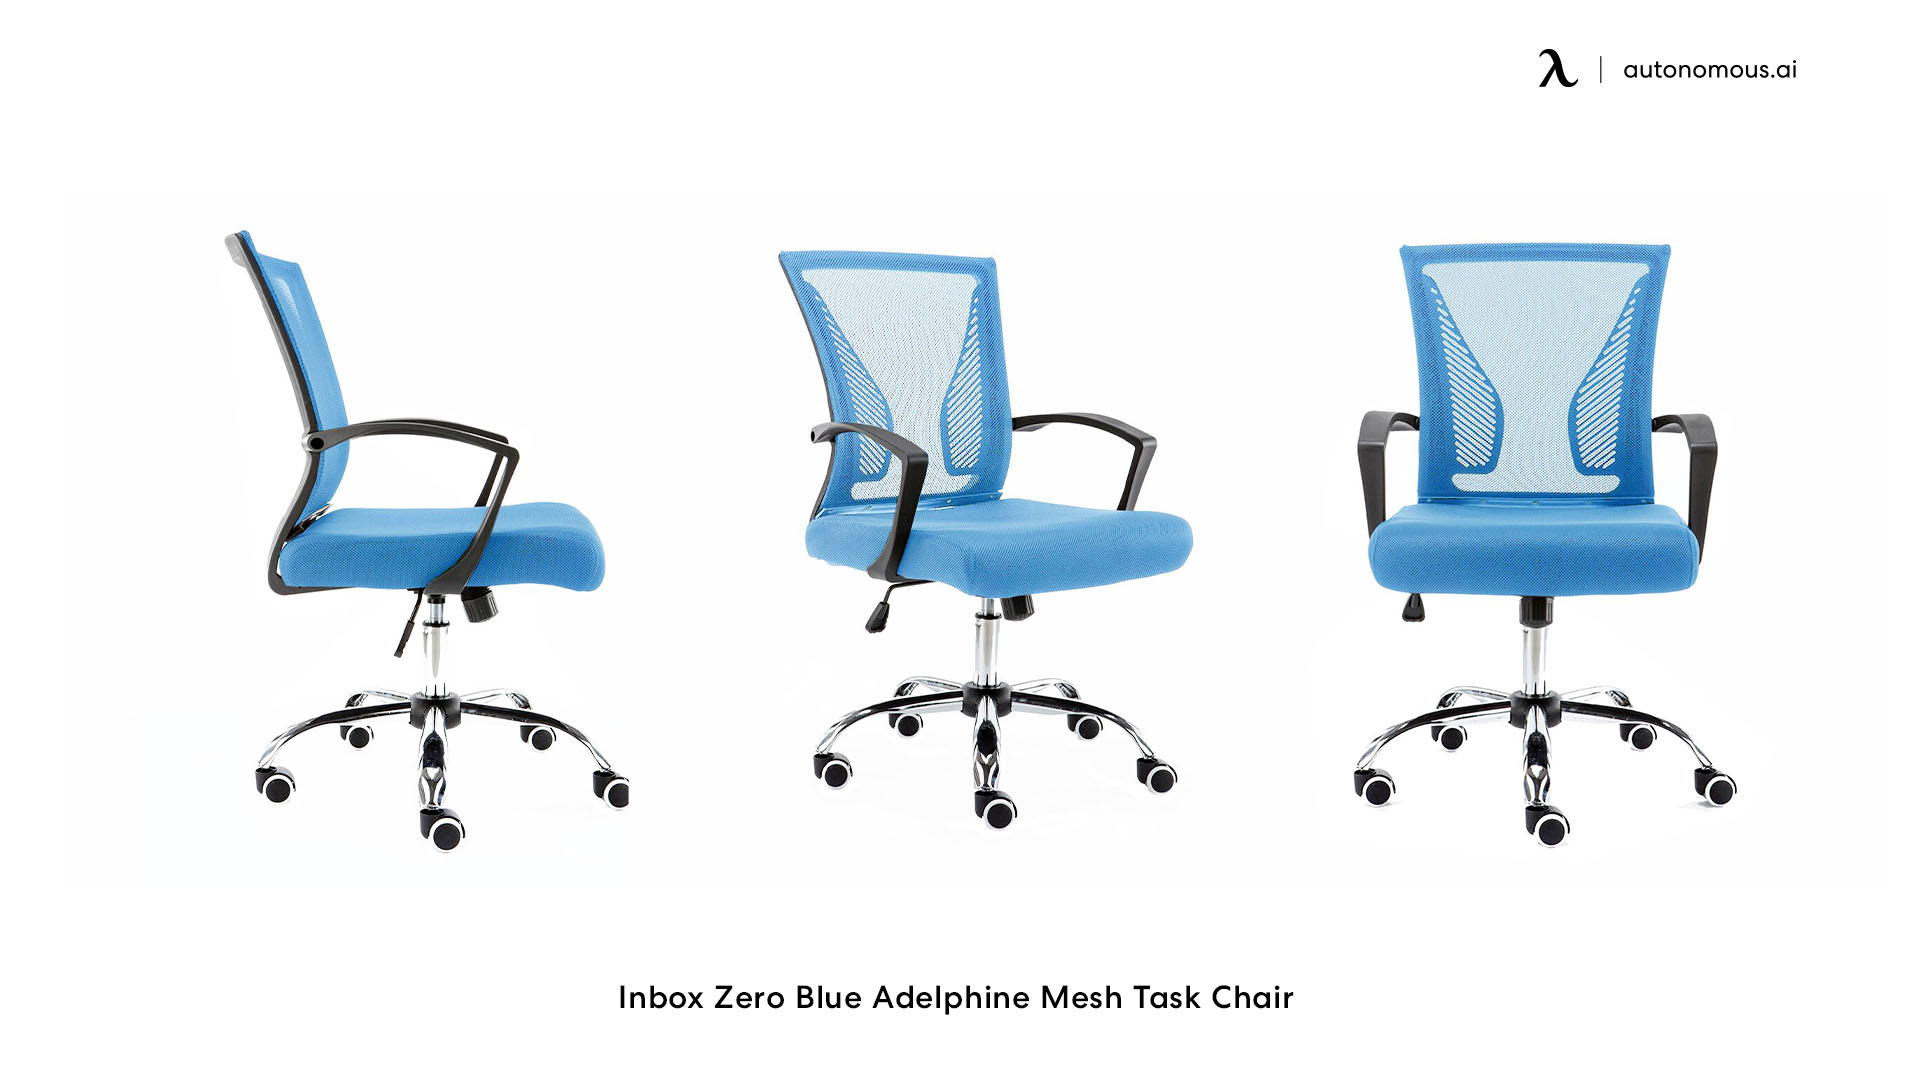 Inbox Zero blue office chair